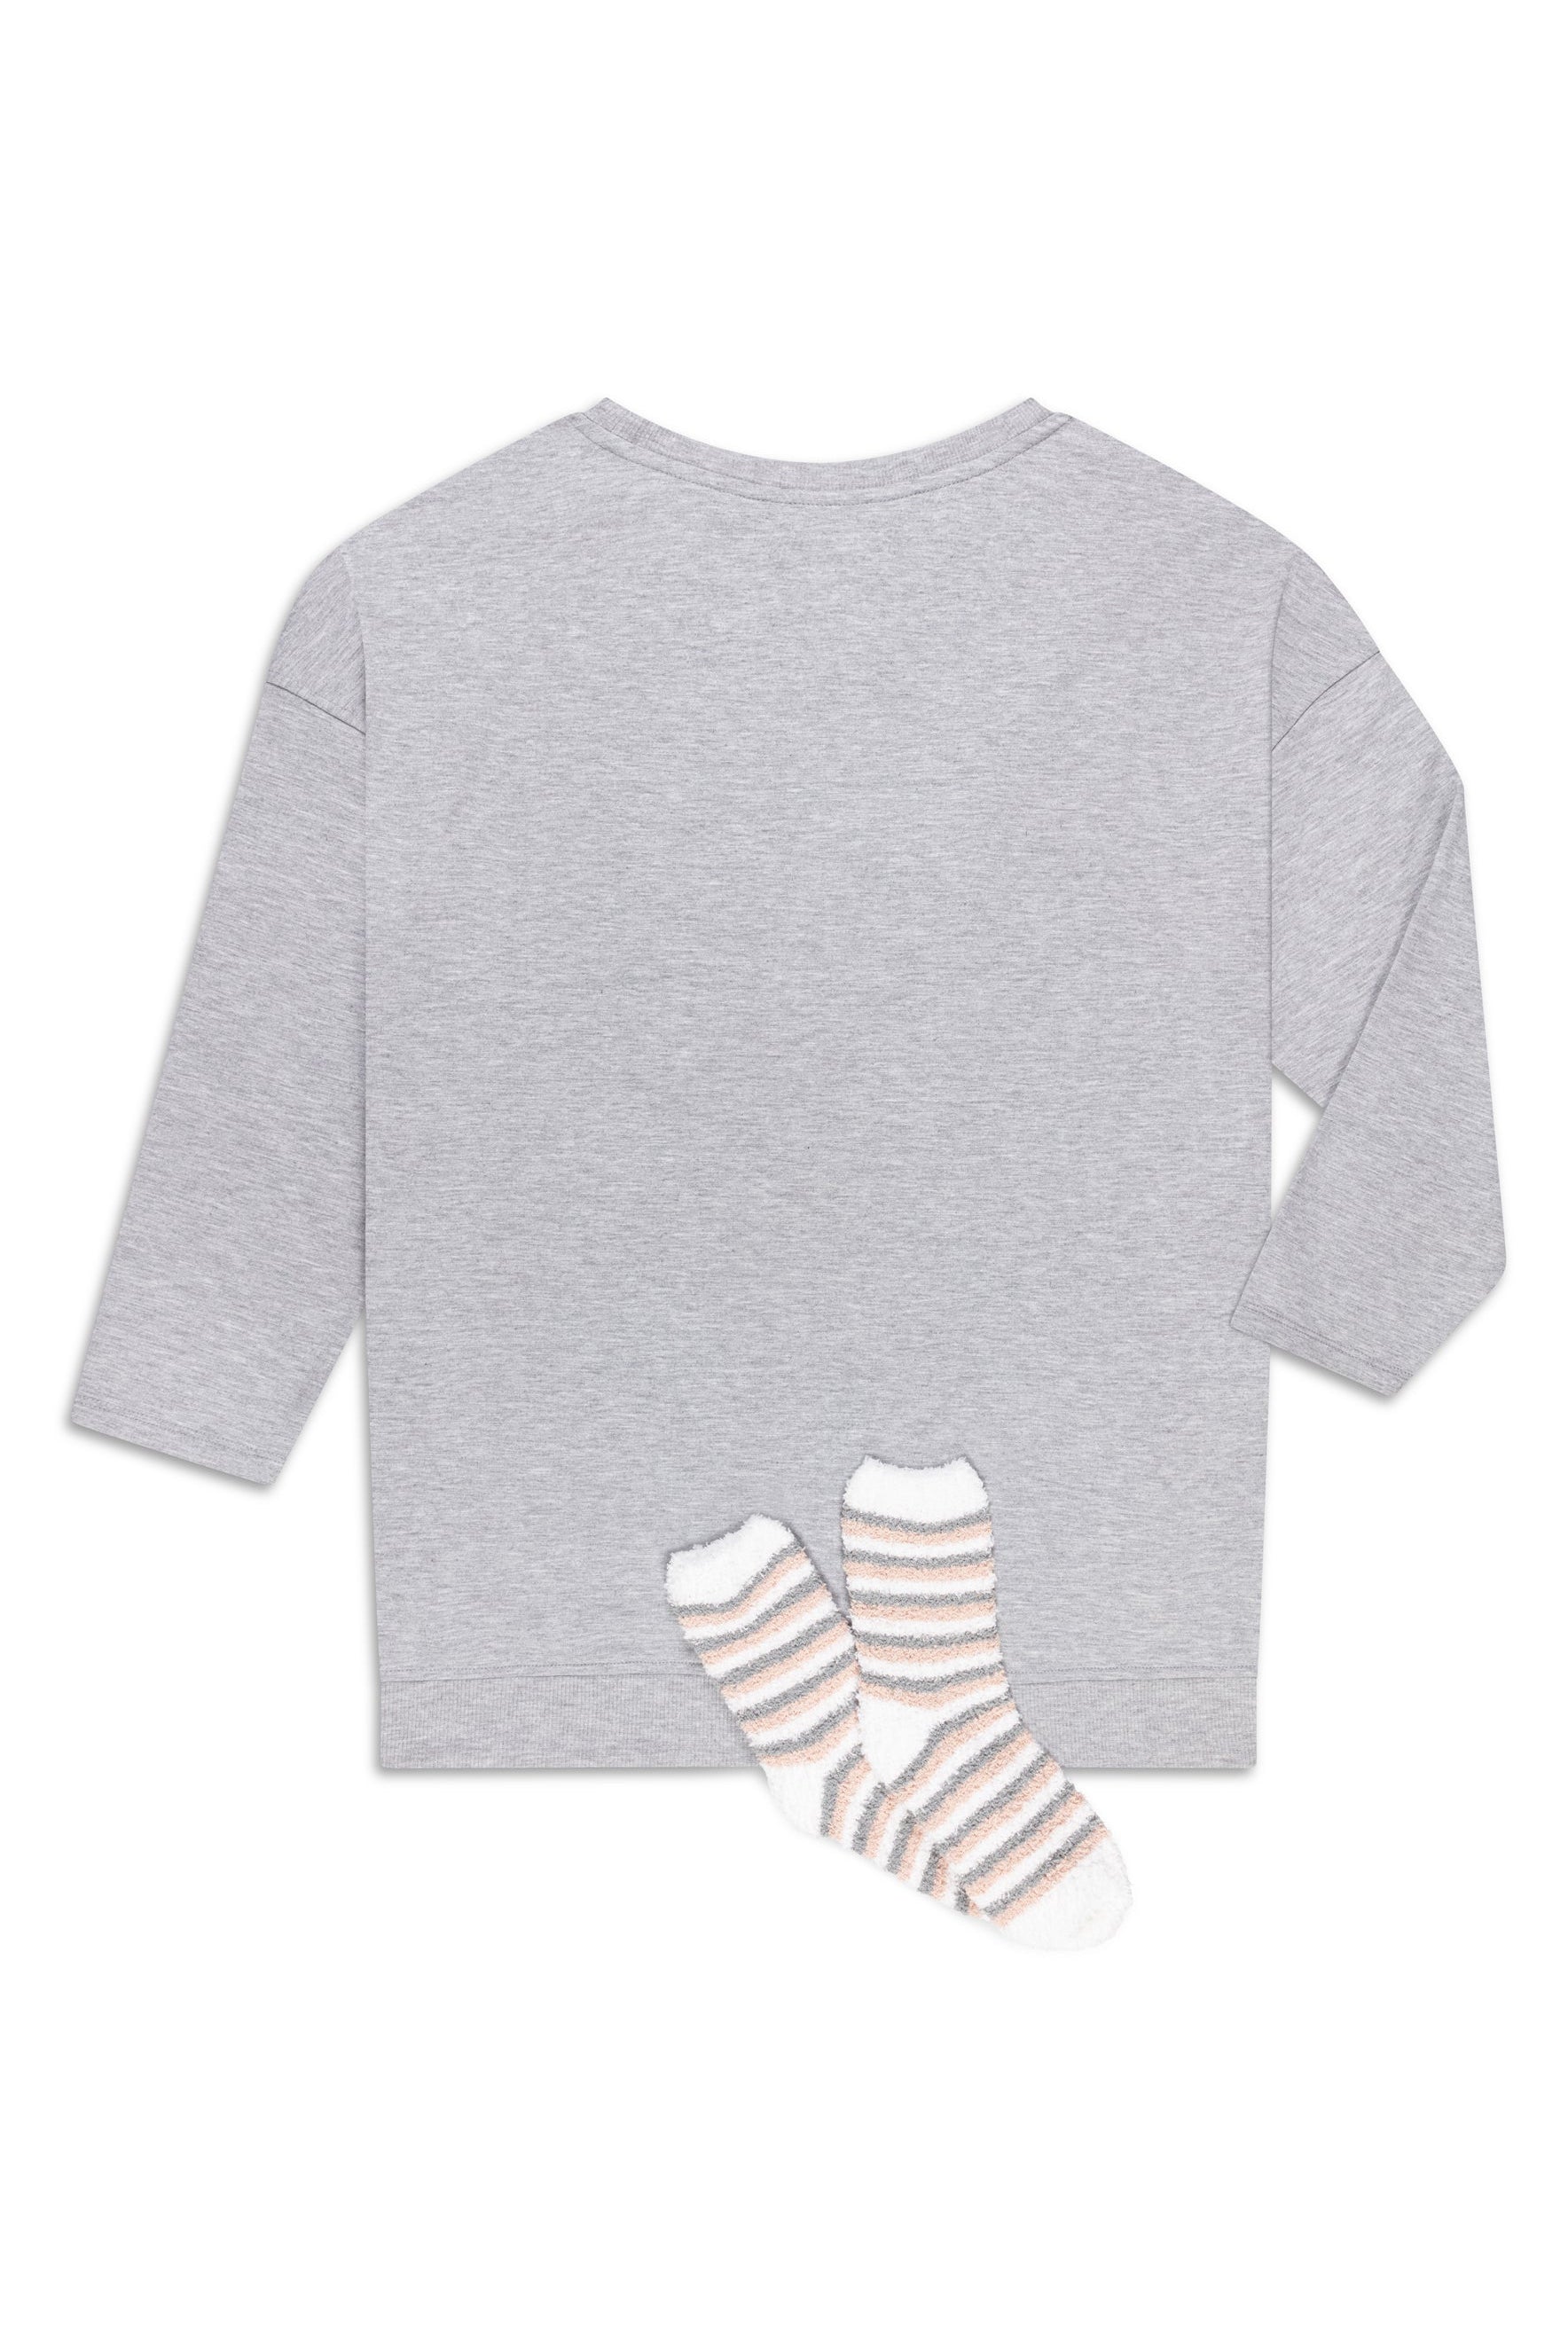 Women's Plus Size "MOM LIFE" Pullover Tunic Sweatshirt with Cozy Socks - Rae Dunn Wear